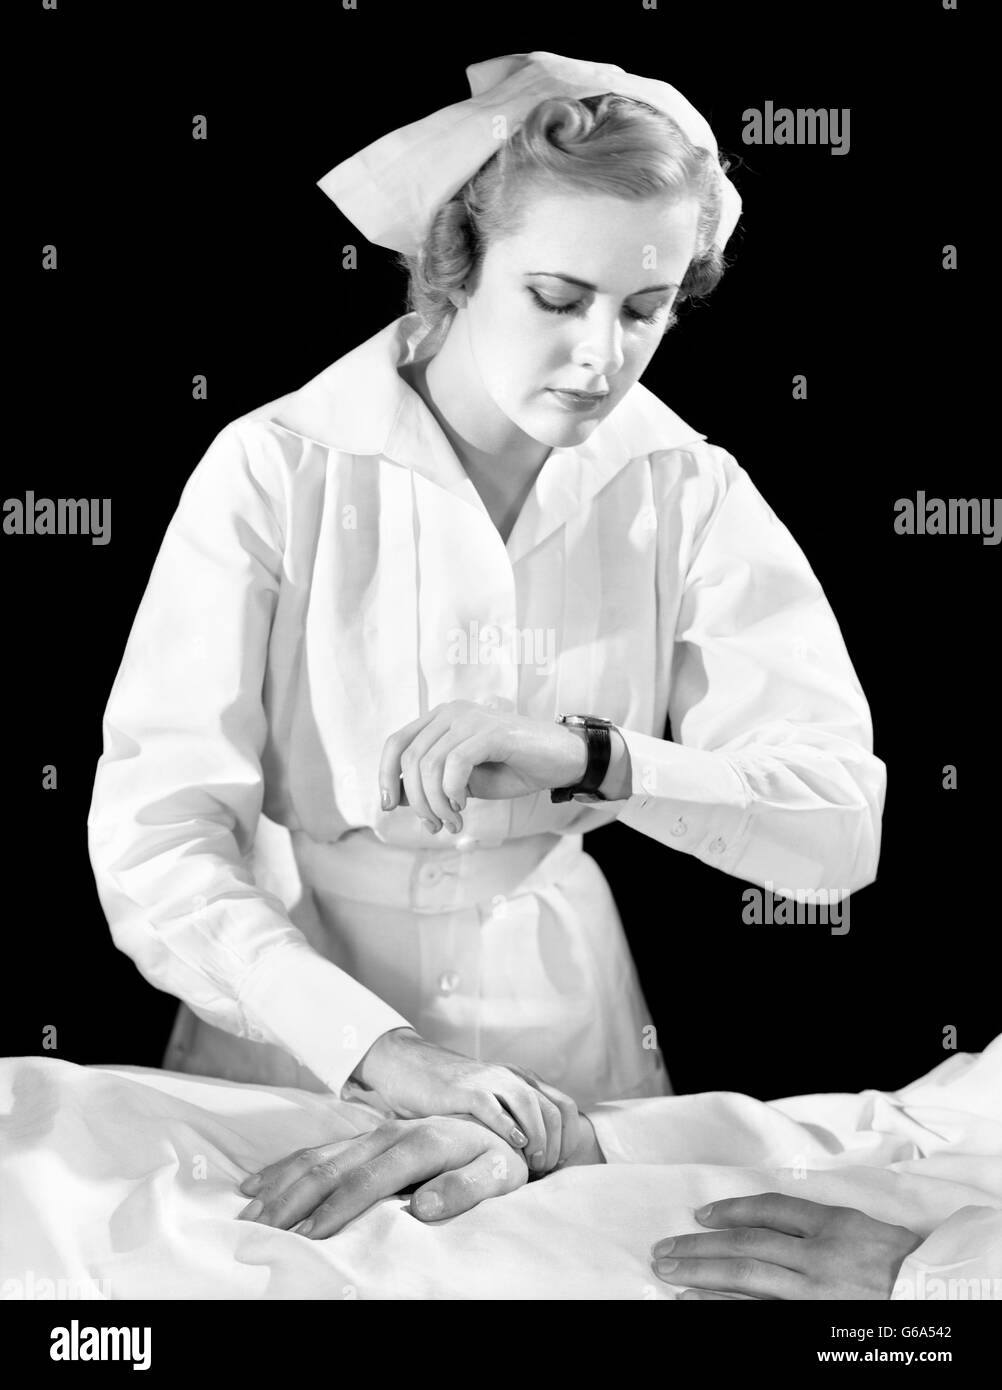 1930s FEMALE NURSE CHECKING PATIENT’S PULSE Stock Photo